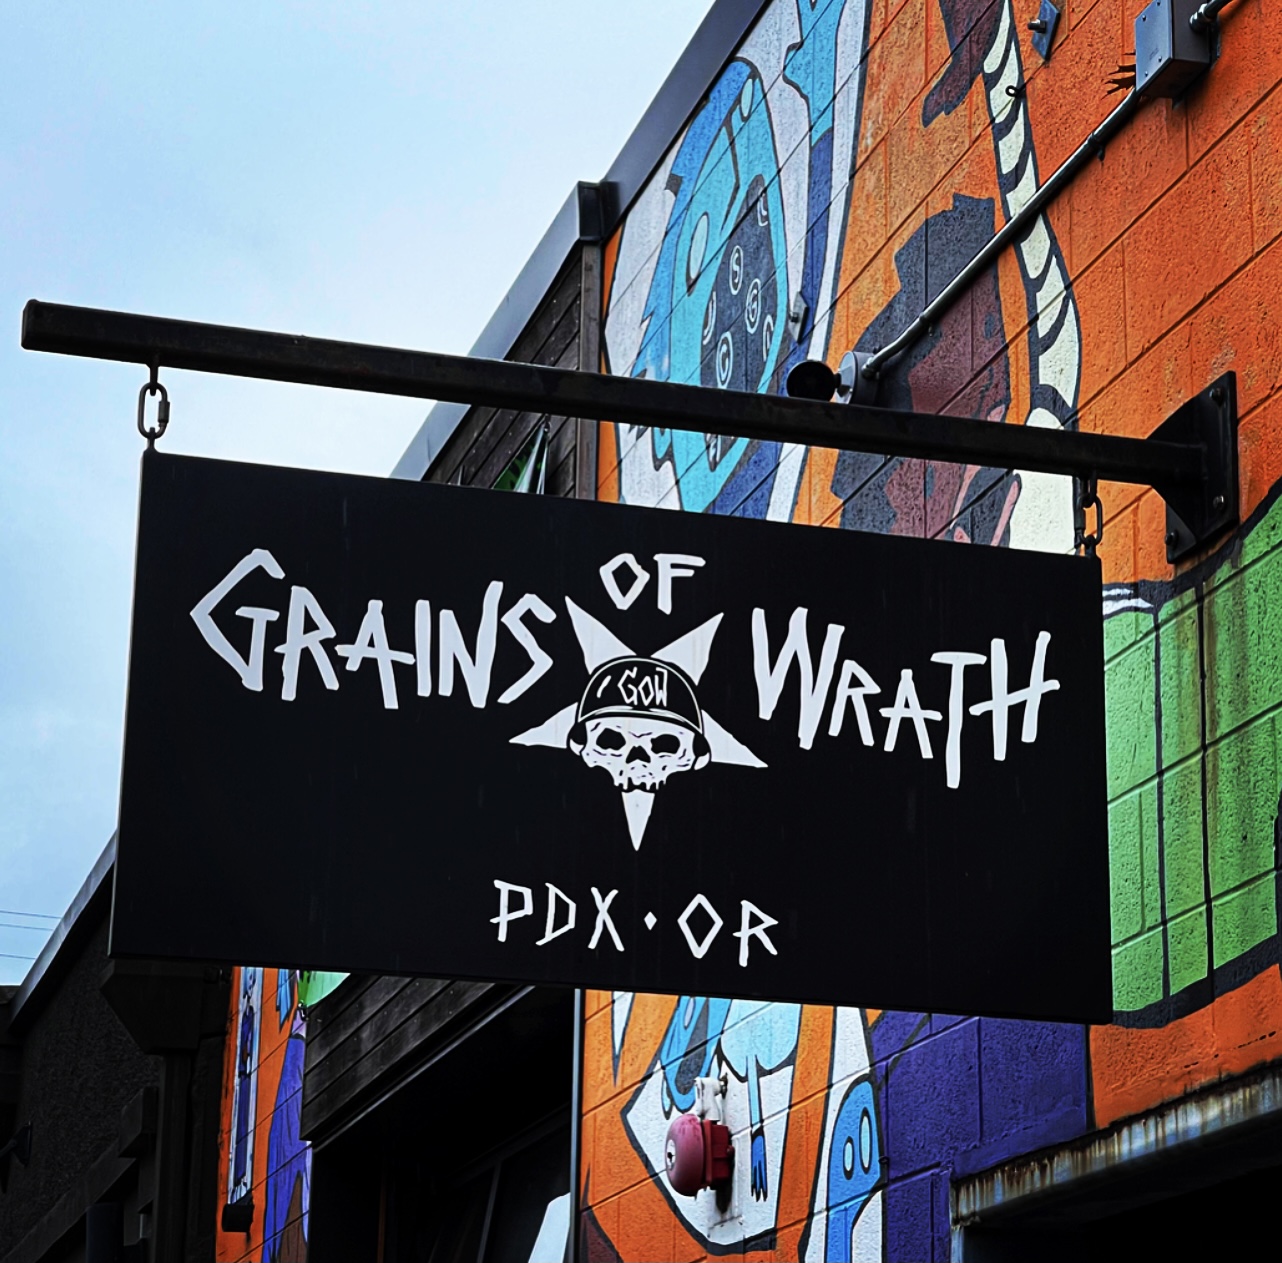 Michael Hunsaker Grains of Wrath Brewery - Craft Beer Podcast Episode 128 by Steven Shomler 